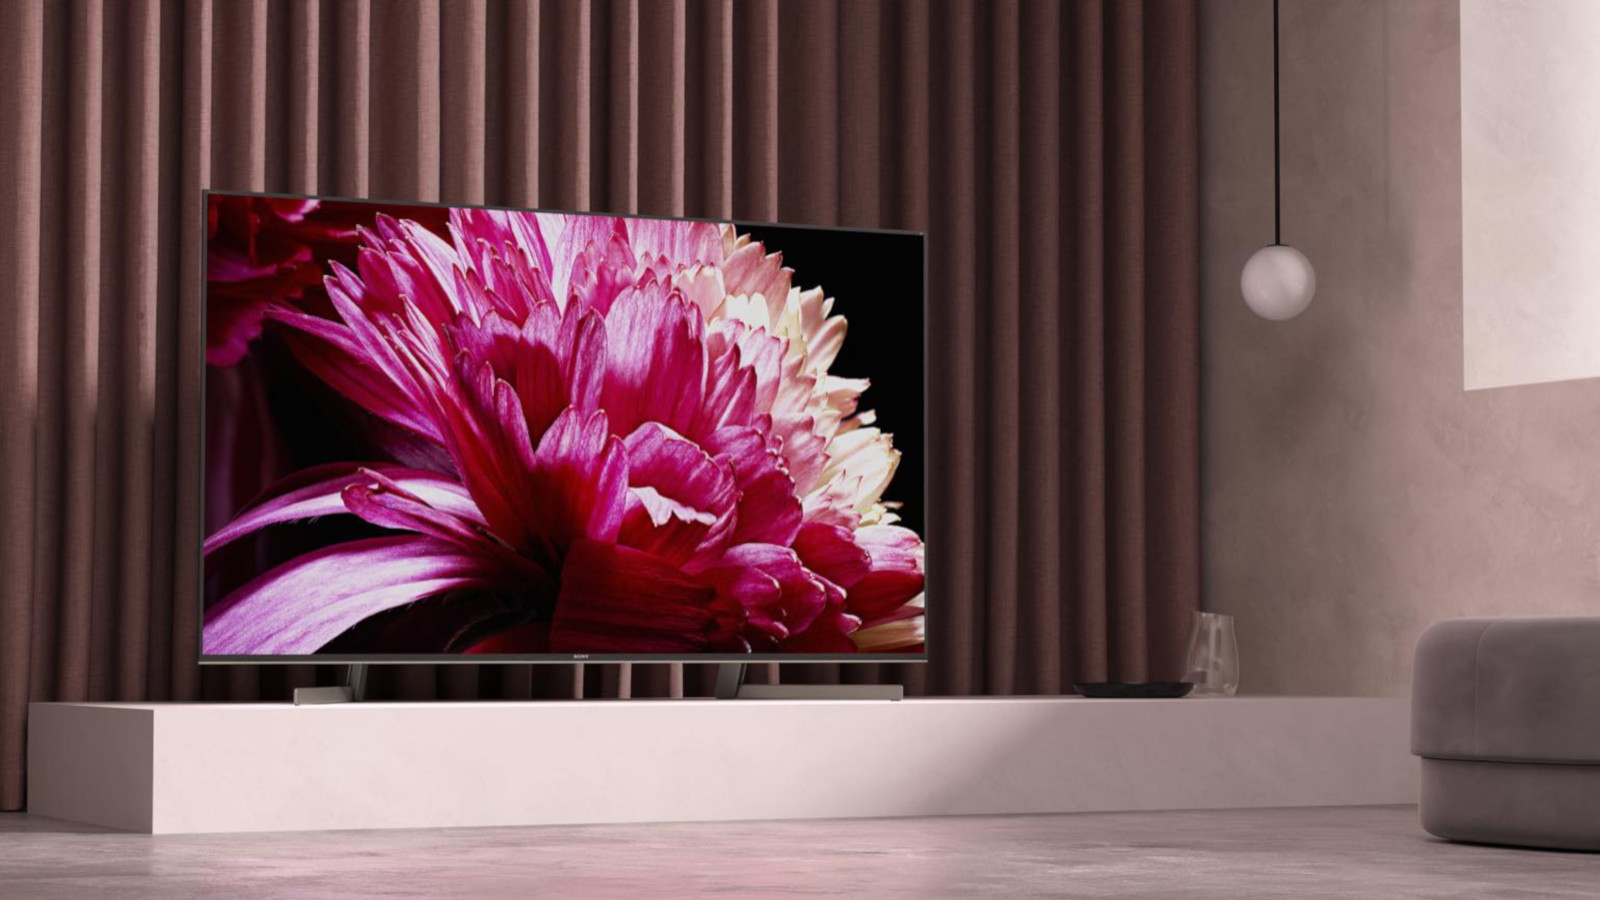 Sony XG95 Series HDR Full Array LED TV – Best of High End